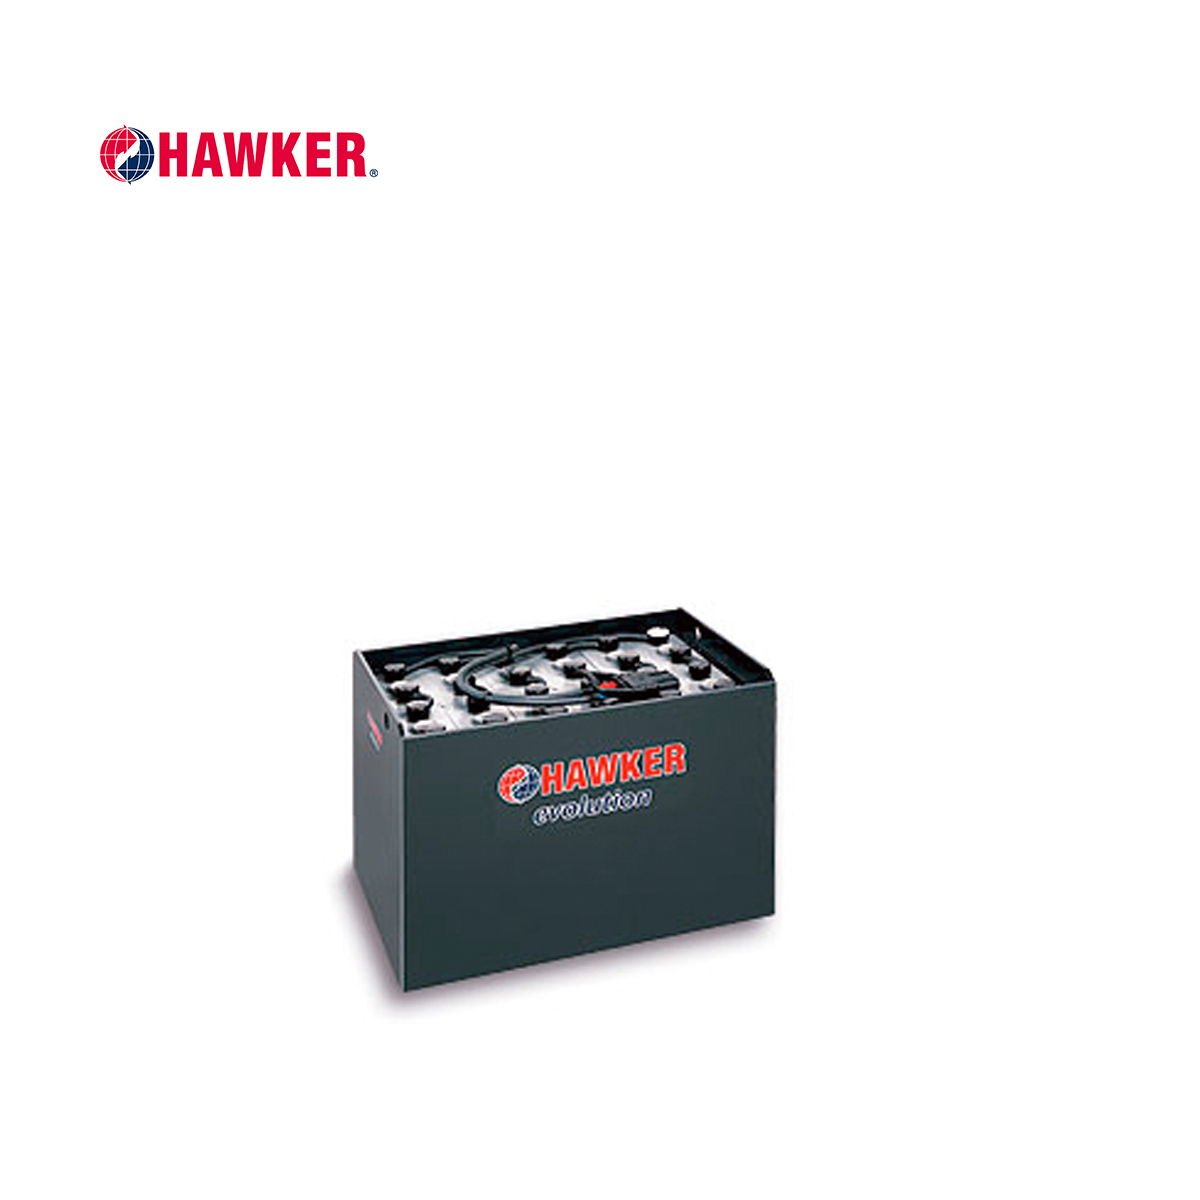 hawker-stapler-pewi-technik.jpg